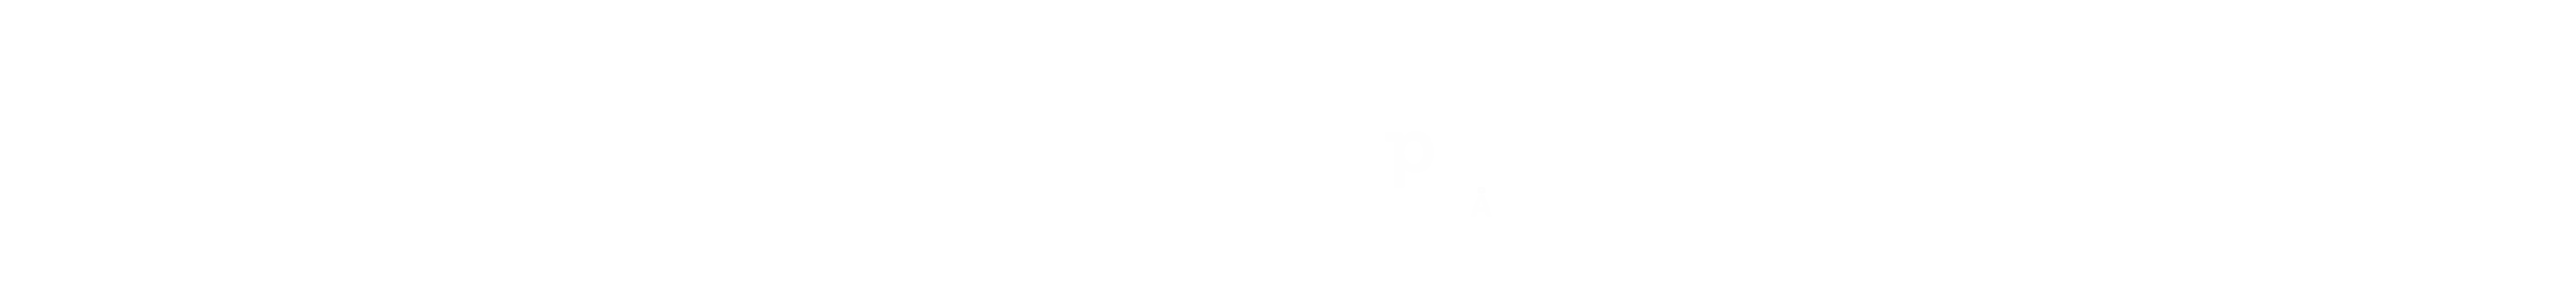 TCS - kunder : Spaljisten,  BorgWarner, PVI Esskå, PVI, Segerström, Trivselhus